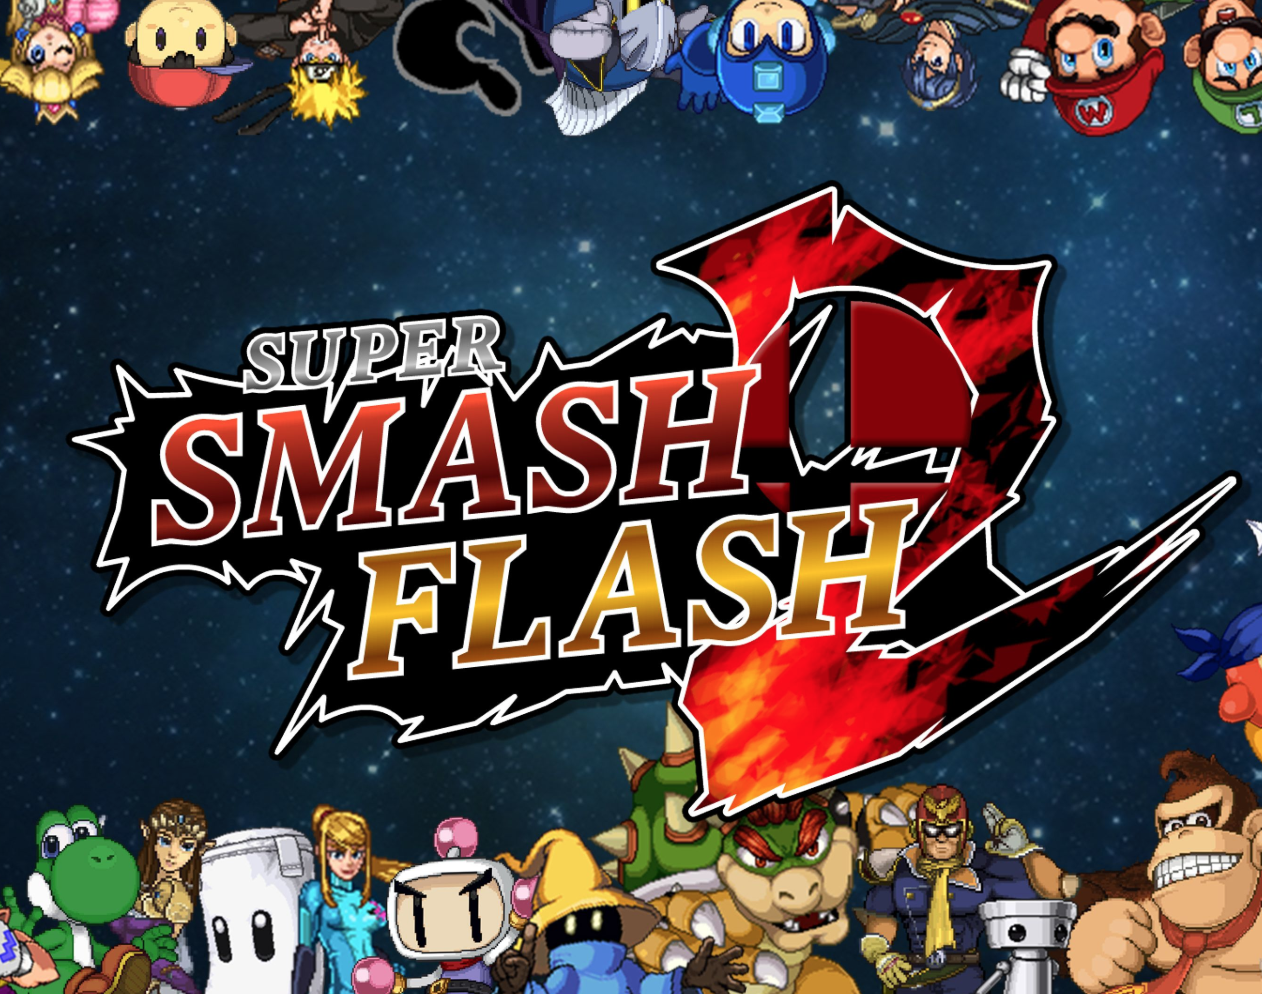 Play Super Smash Flash 2 Unblocked on 66 Unblocked Games